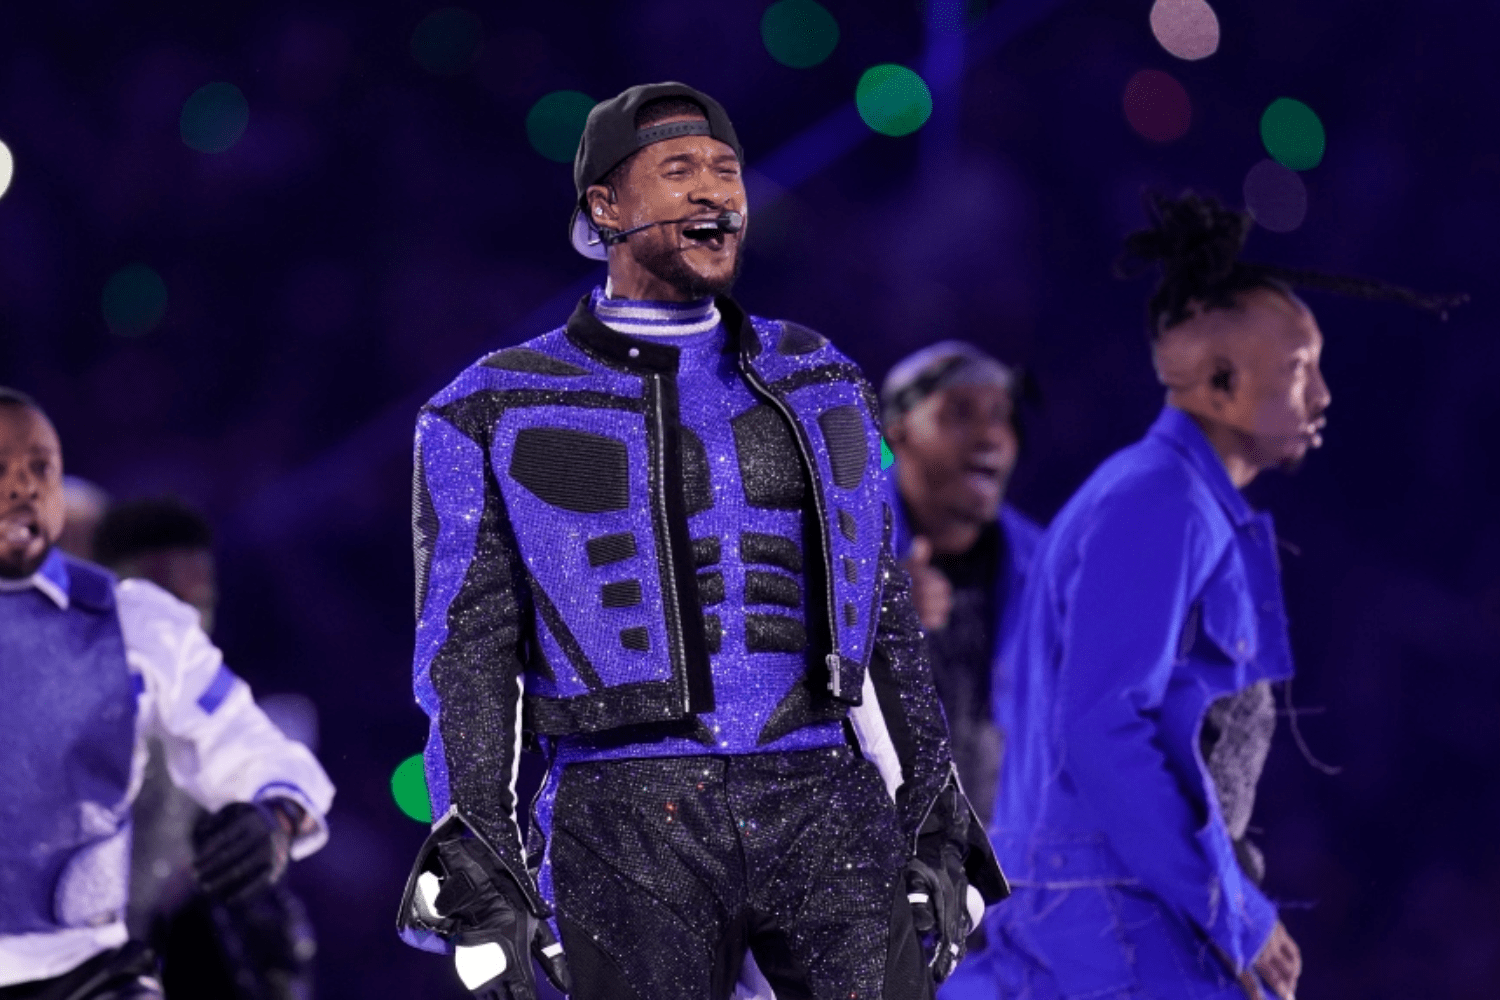 Usher's Jordan 4s, a Beyoncé album and more highlights from Super Bowl LVIII